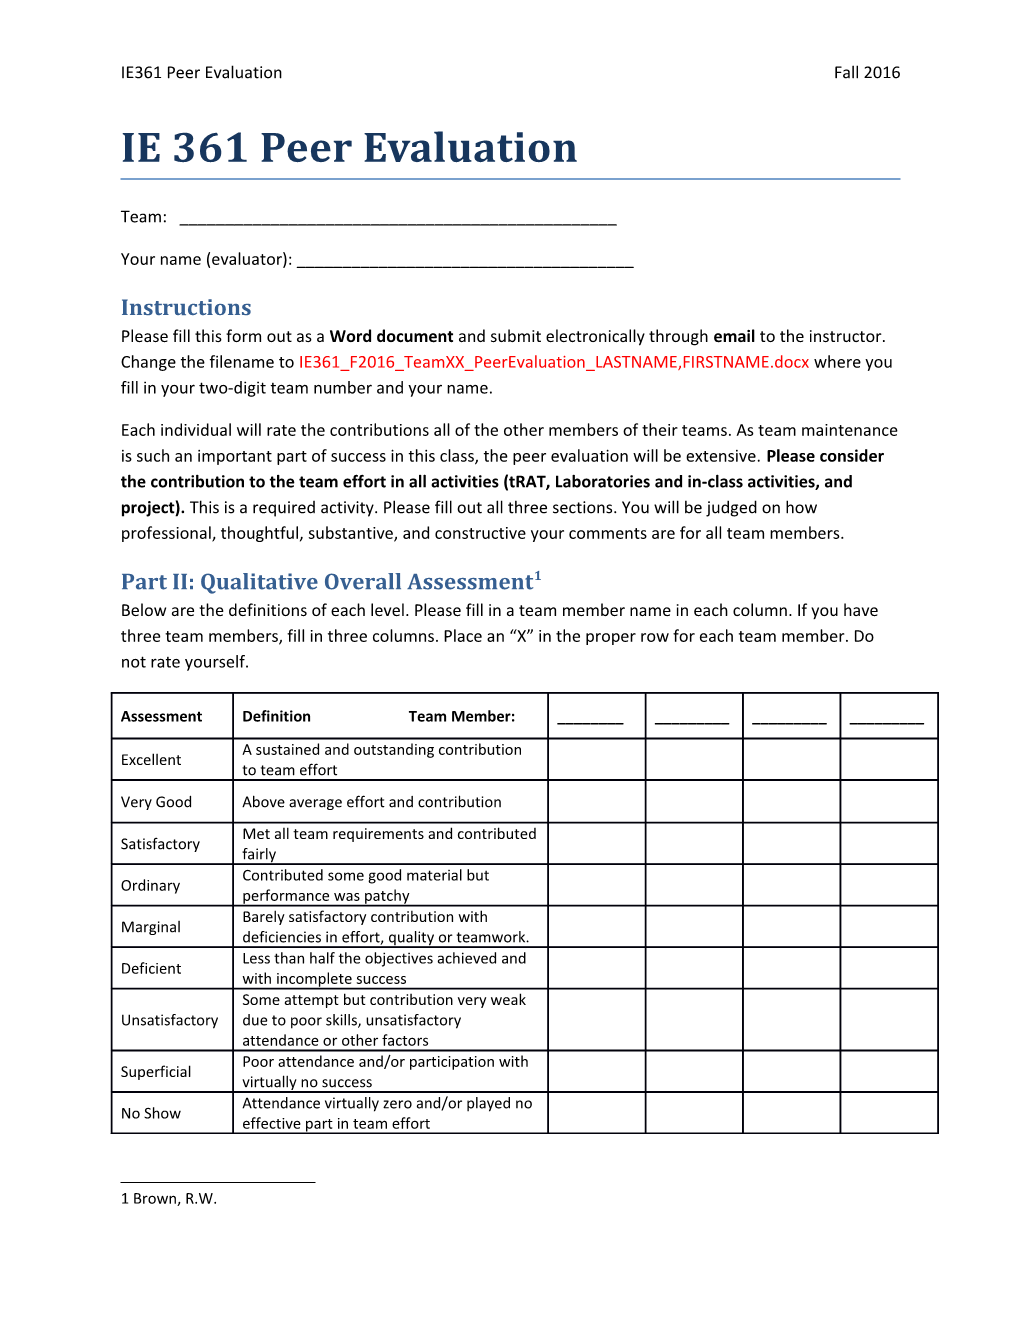 IE 361 Peer Evaluation